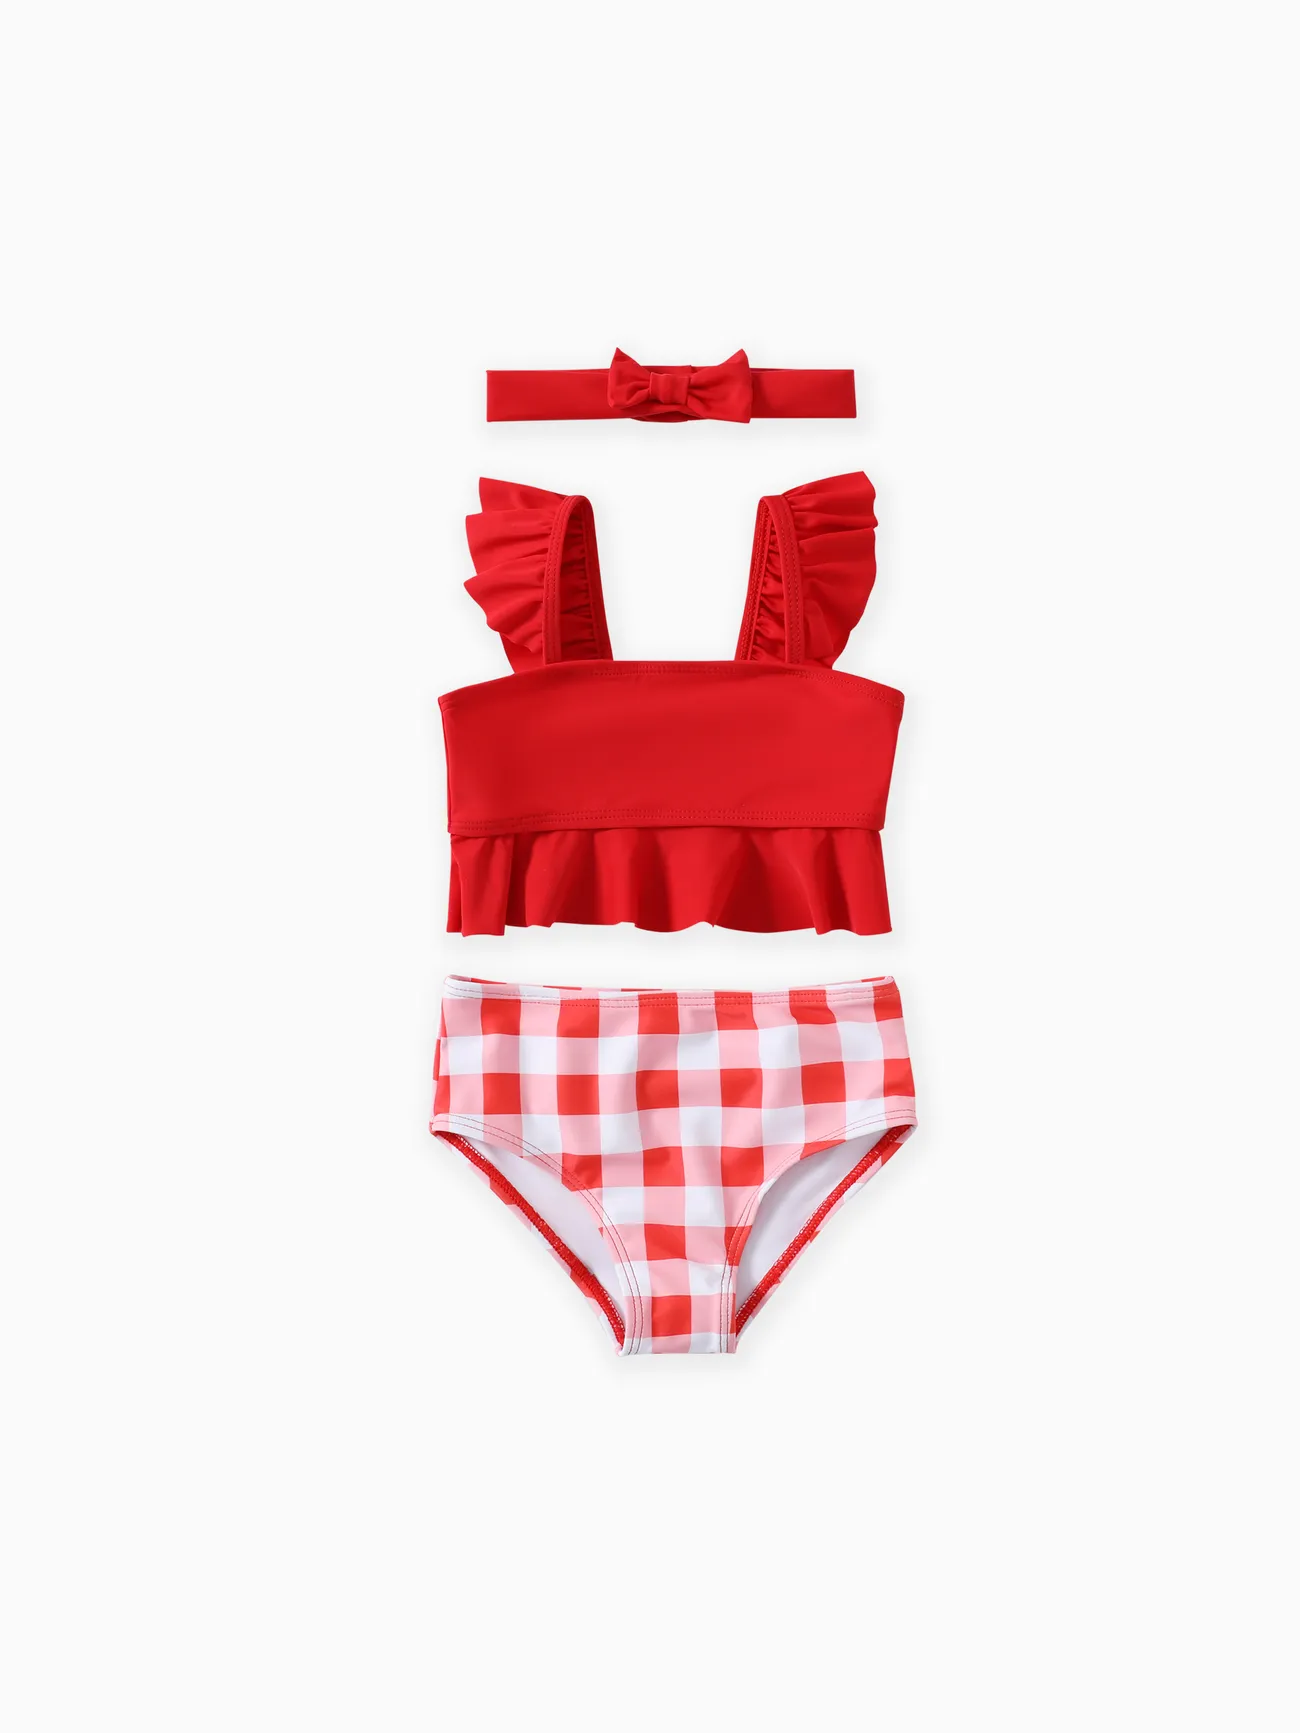 Toddler Girl 3pcs Ruffled Top and Shorts and Headband Swimsuits Set Red big image 1